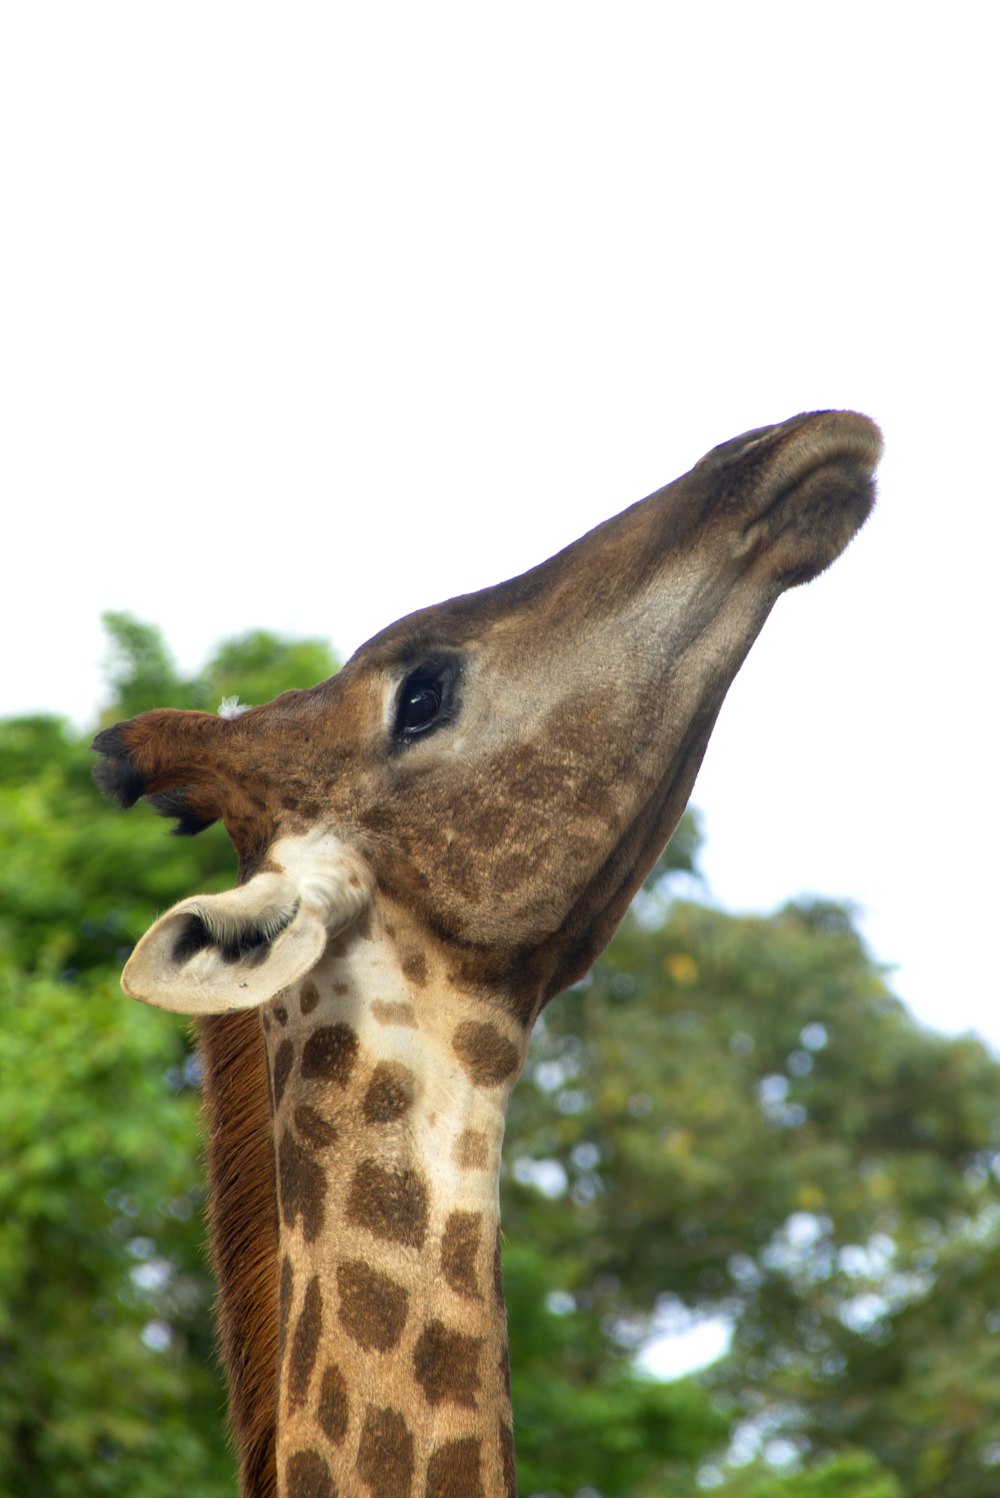 giraffe standing near green trees during daytime